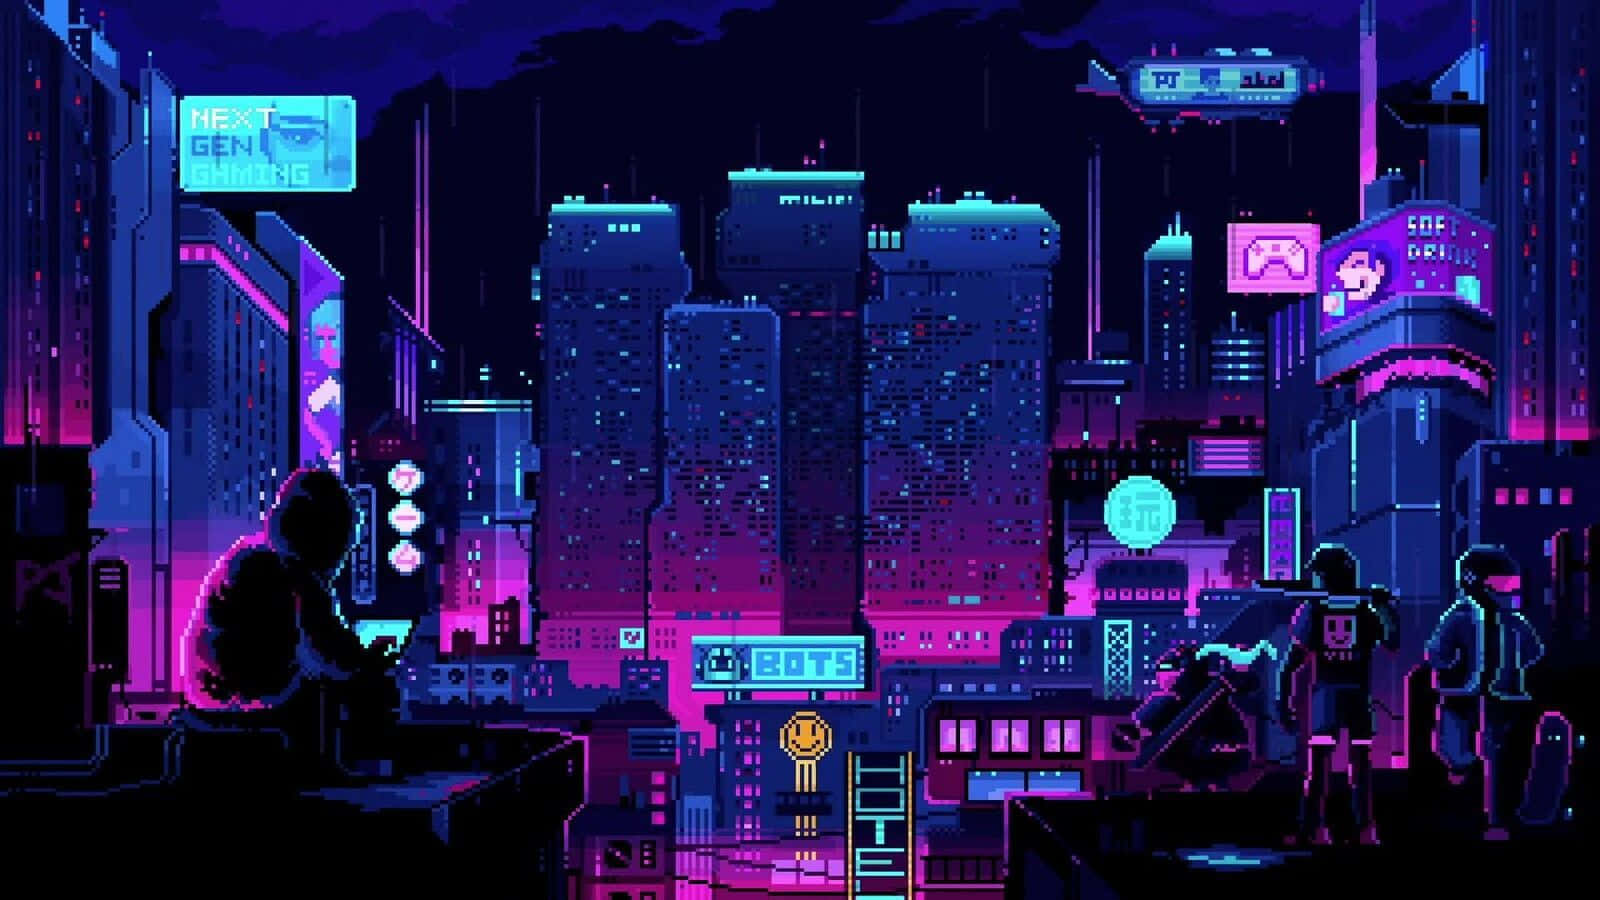 Explore the neon-lit cyberpunk city in this pixel art! Wallpaper